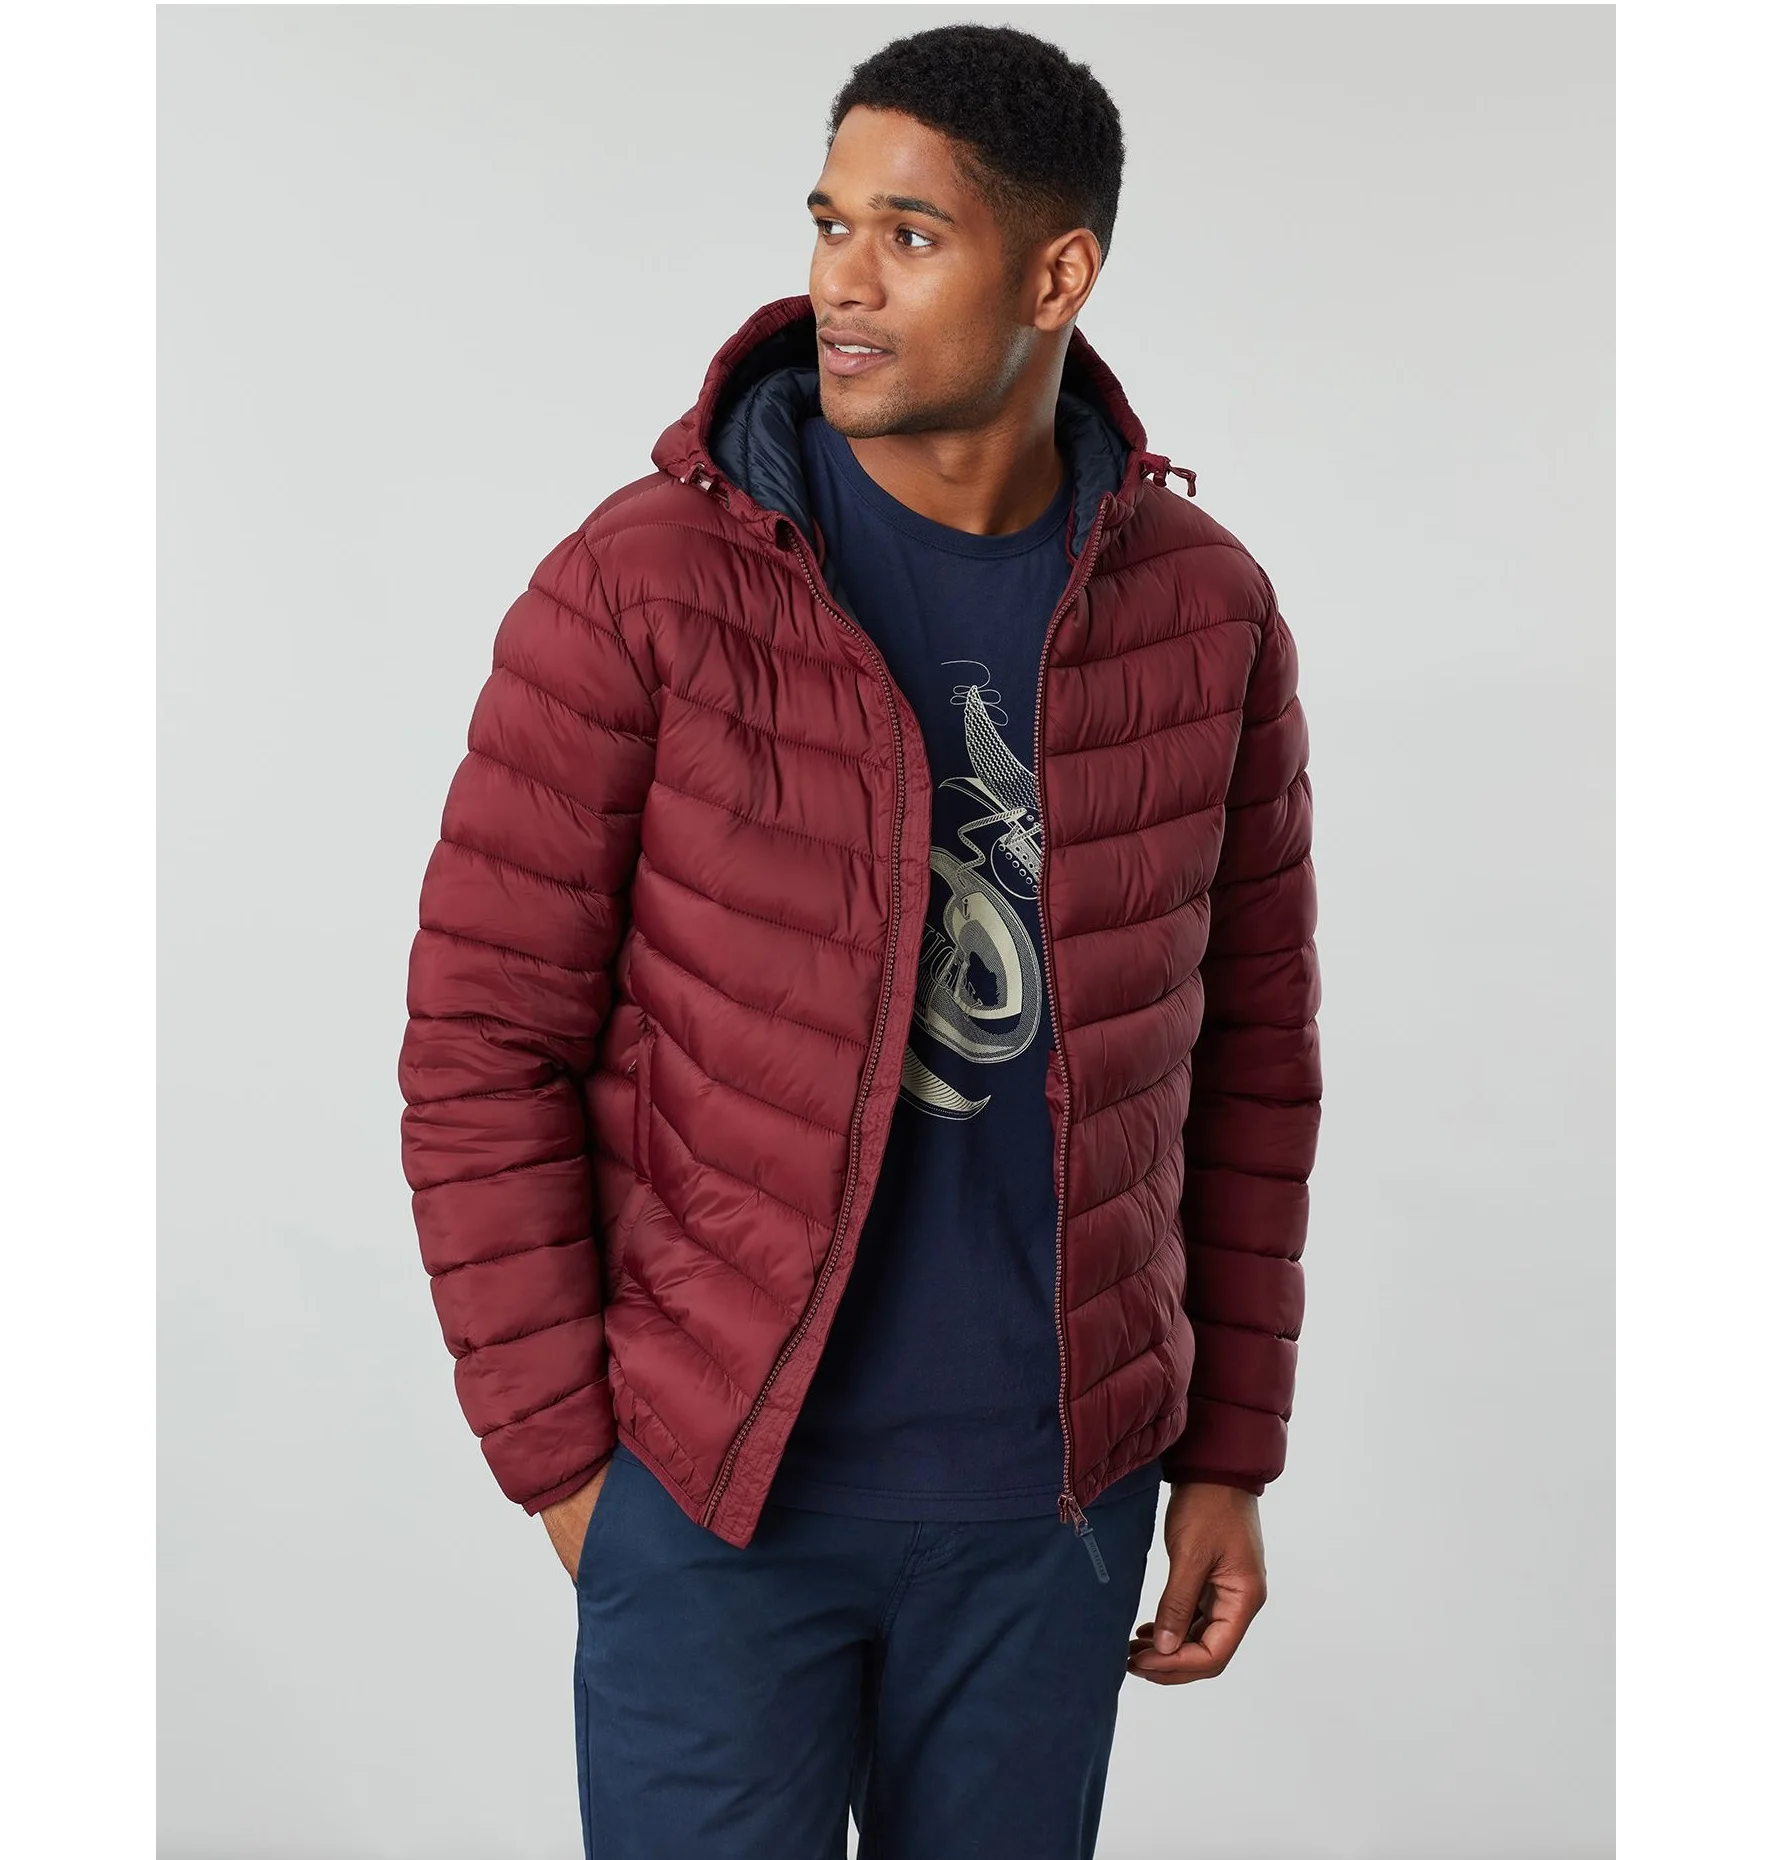 Mens Jackets 2020 Winter Fashion Stylish Custom Design Hooded Puffer Bubble Coat Mens Jacket